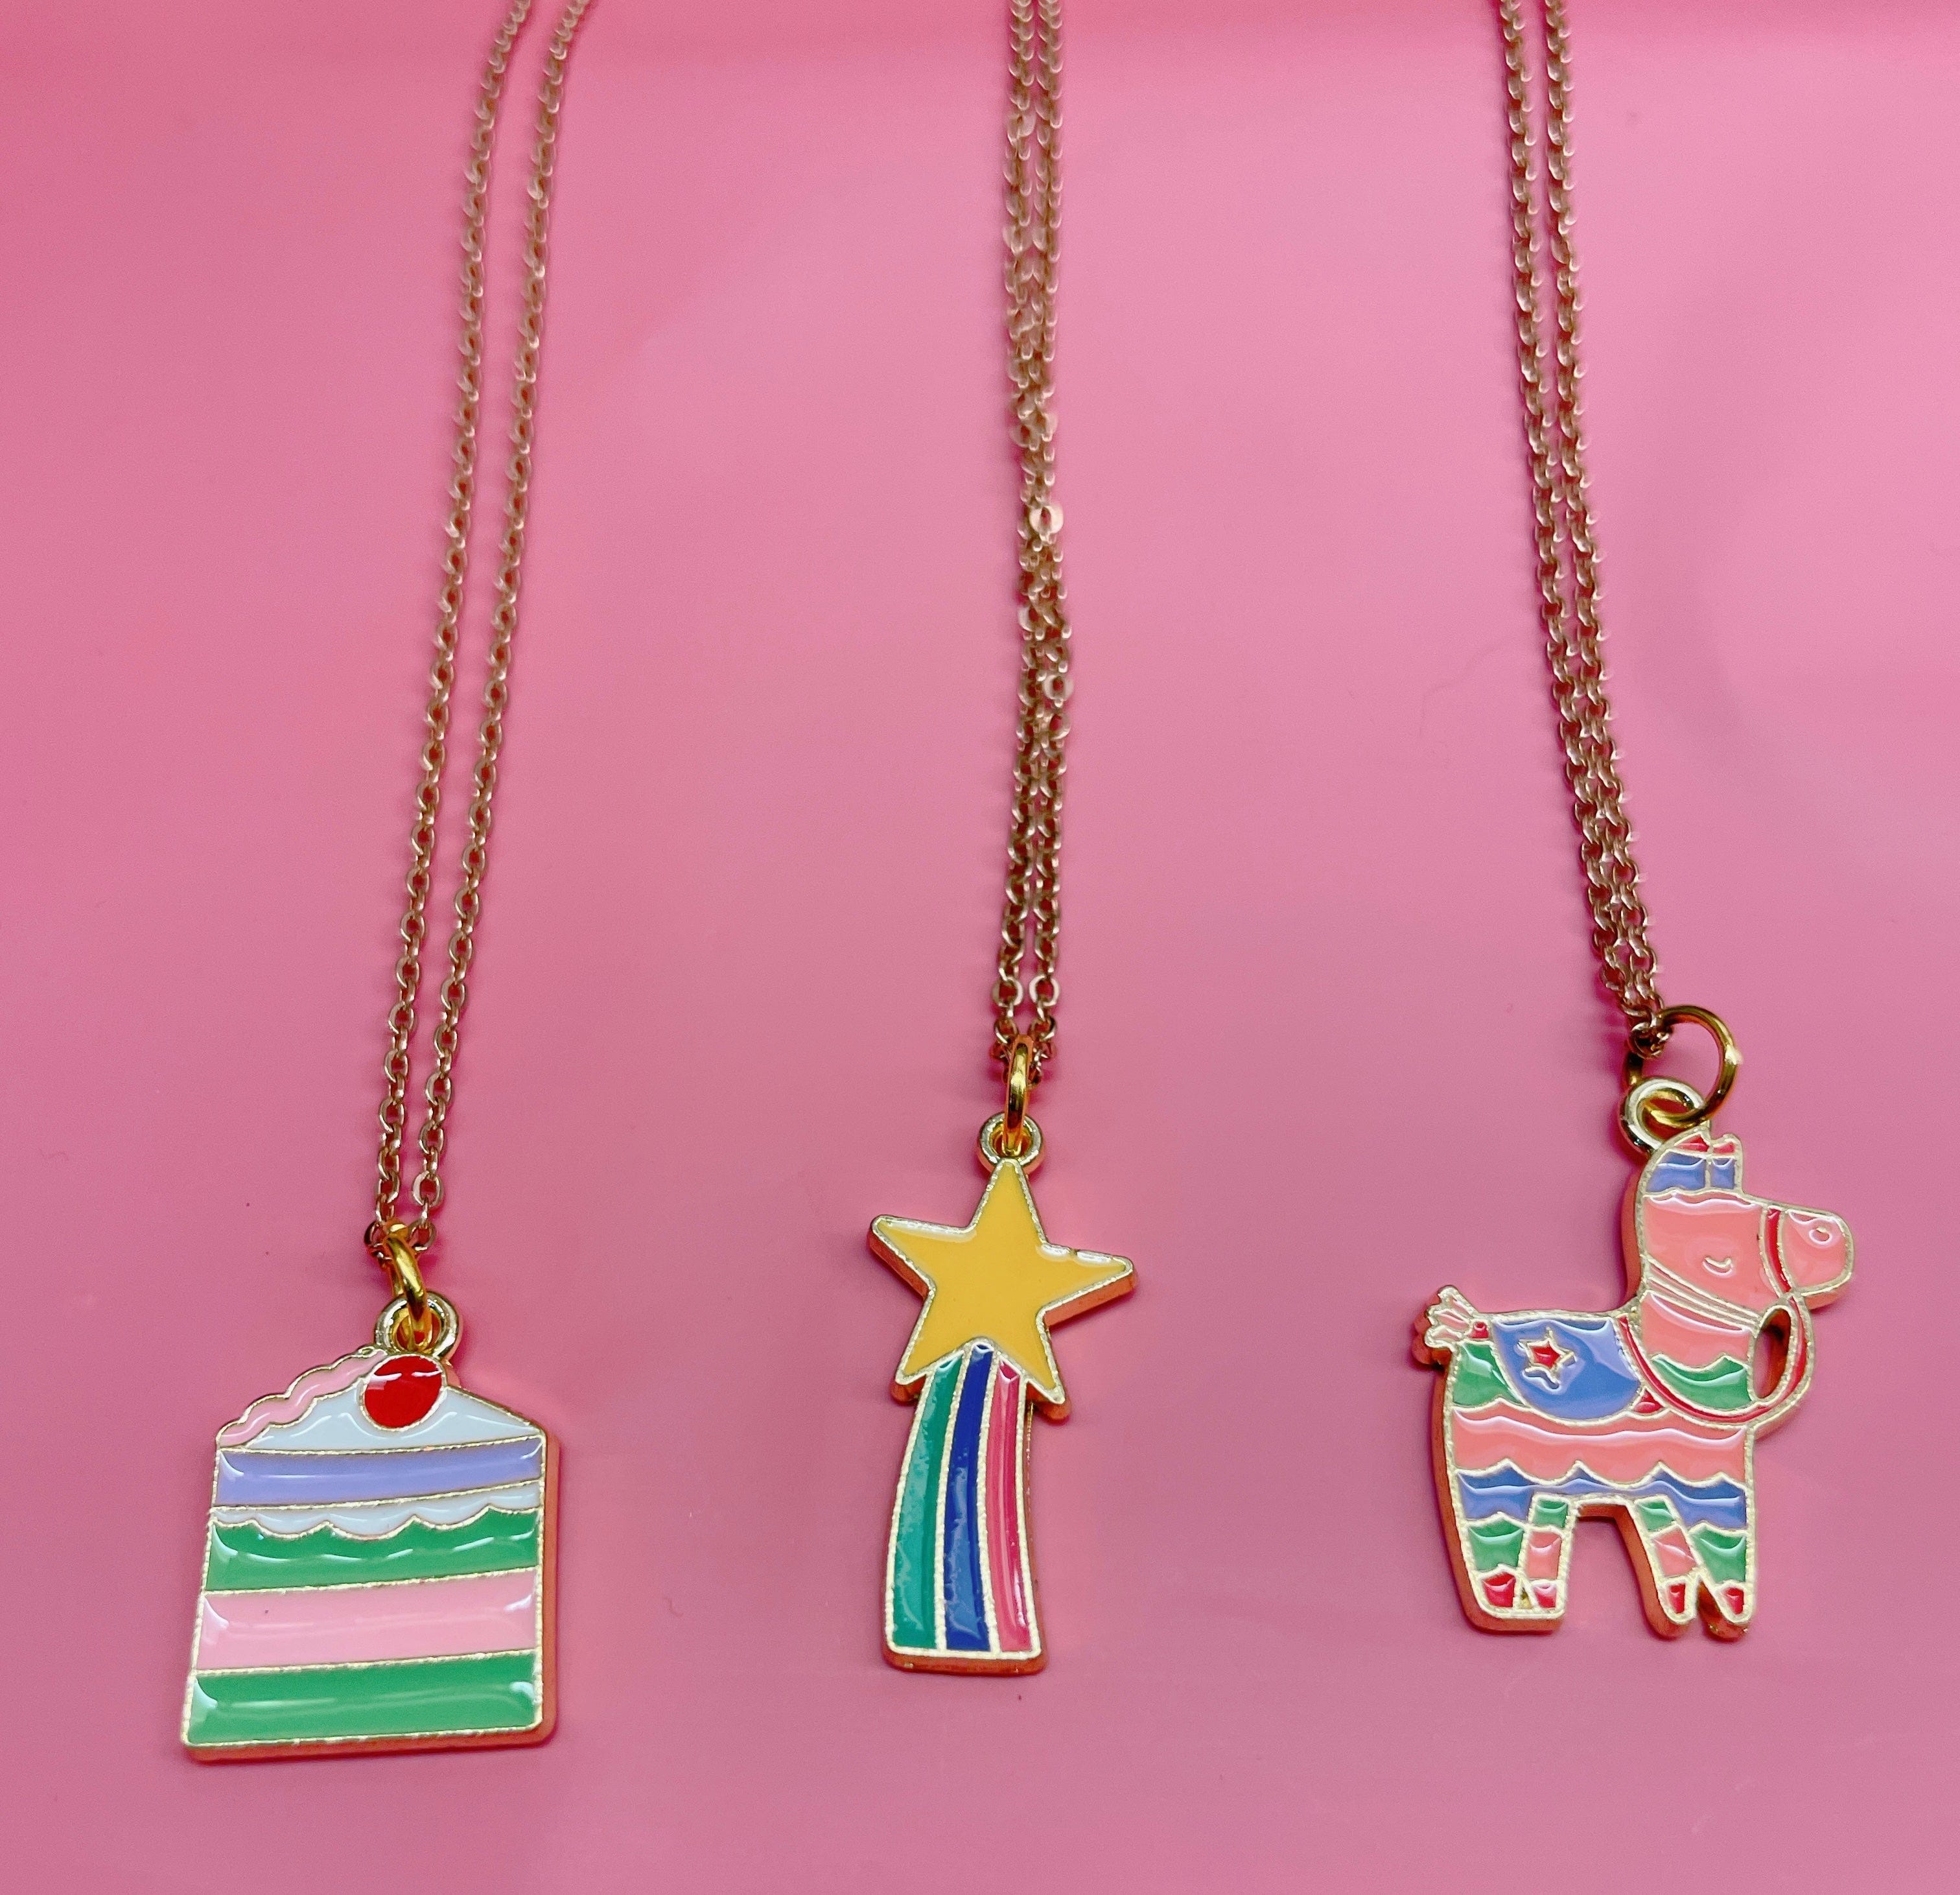 Taobao Sweet Charm Necklace Kawaii Gifts